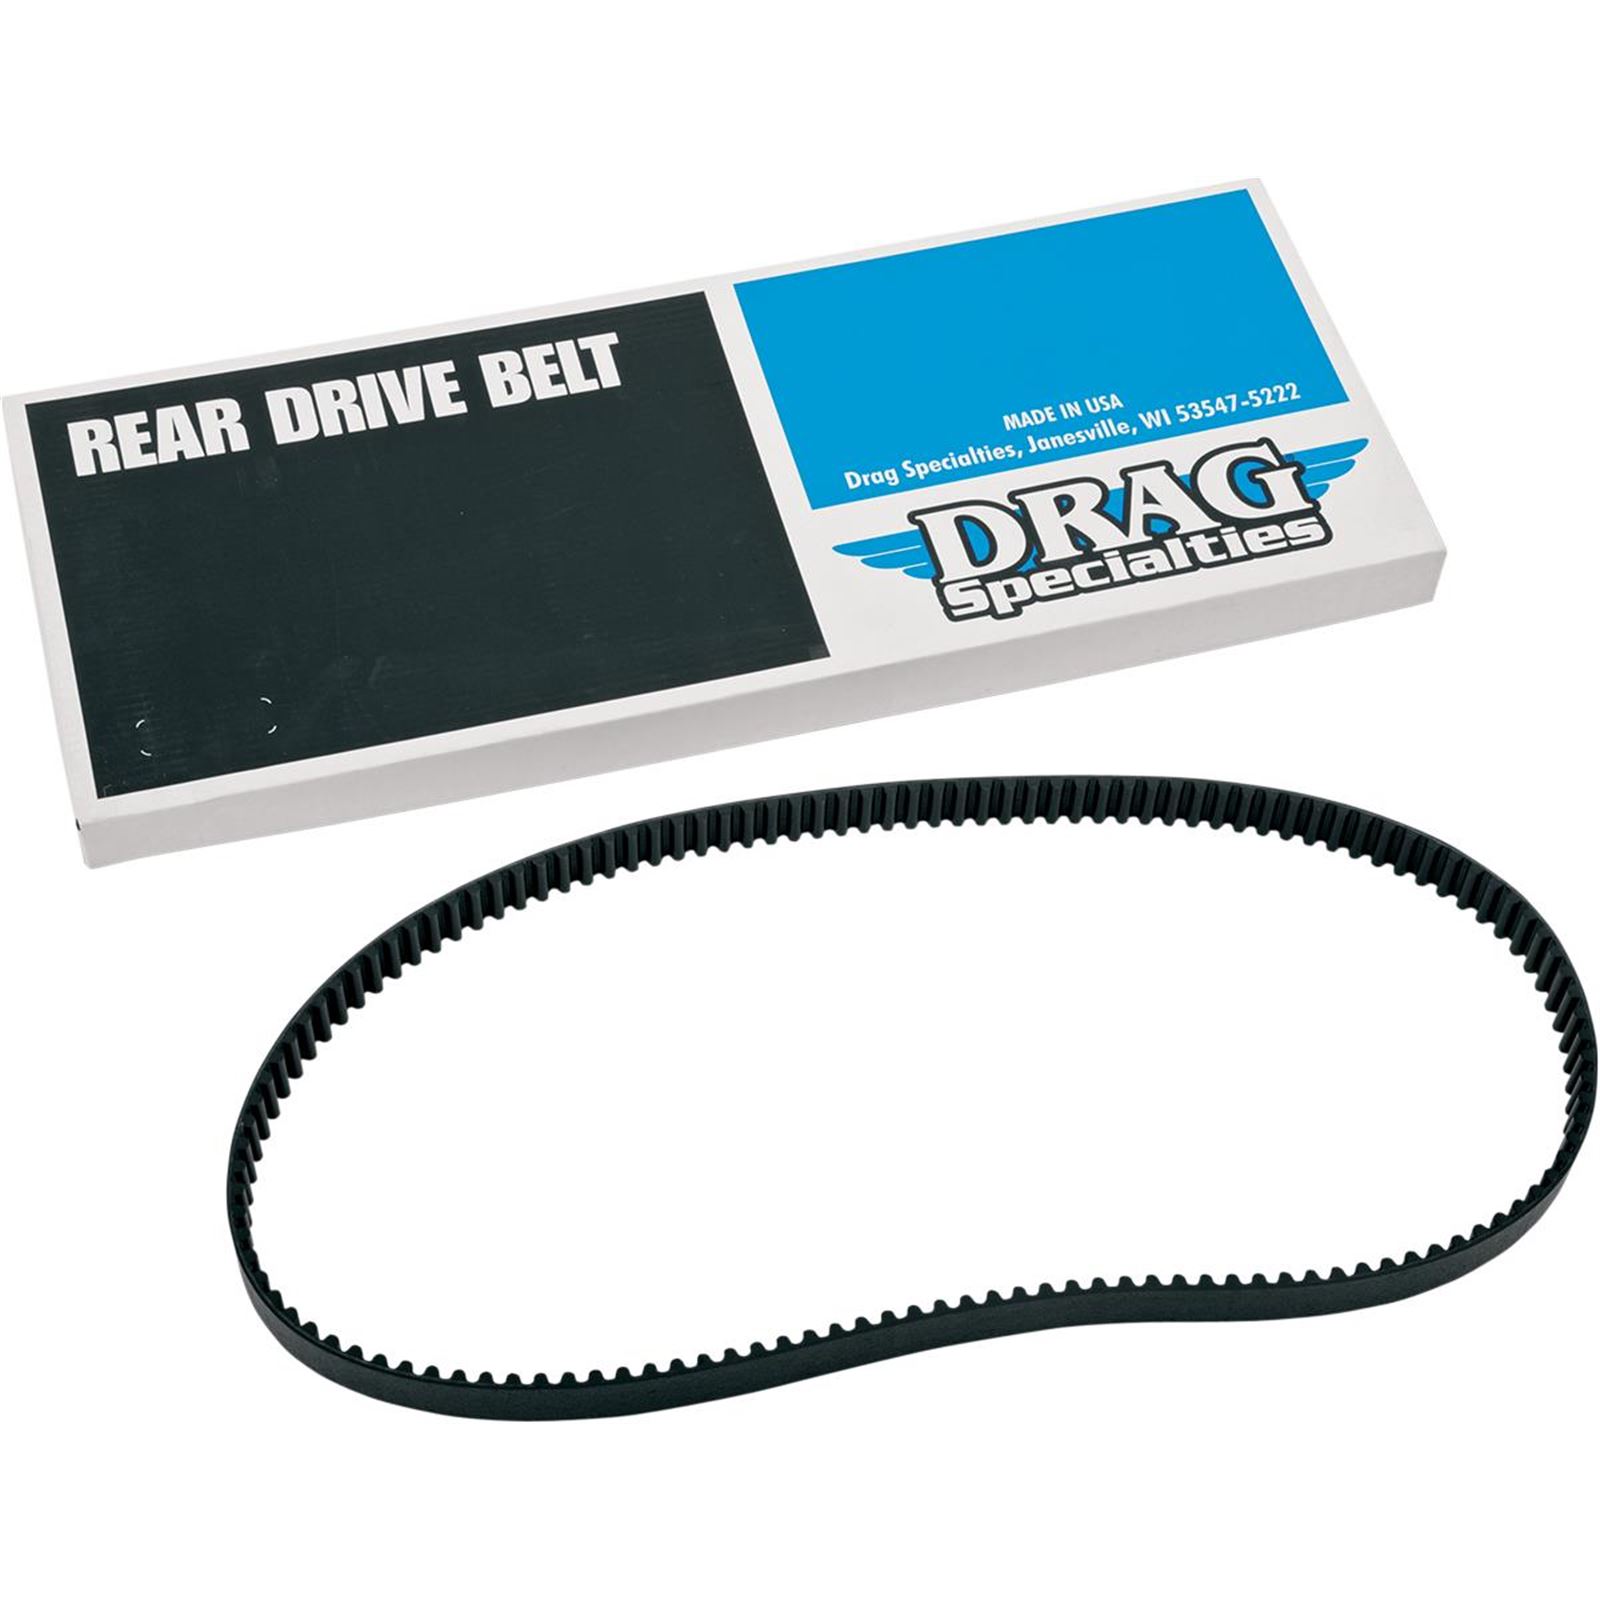 Drag Specialties Rear Drive Belt - 130-Tooth - 1"